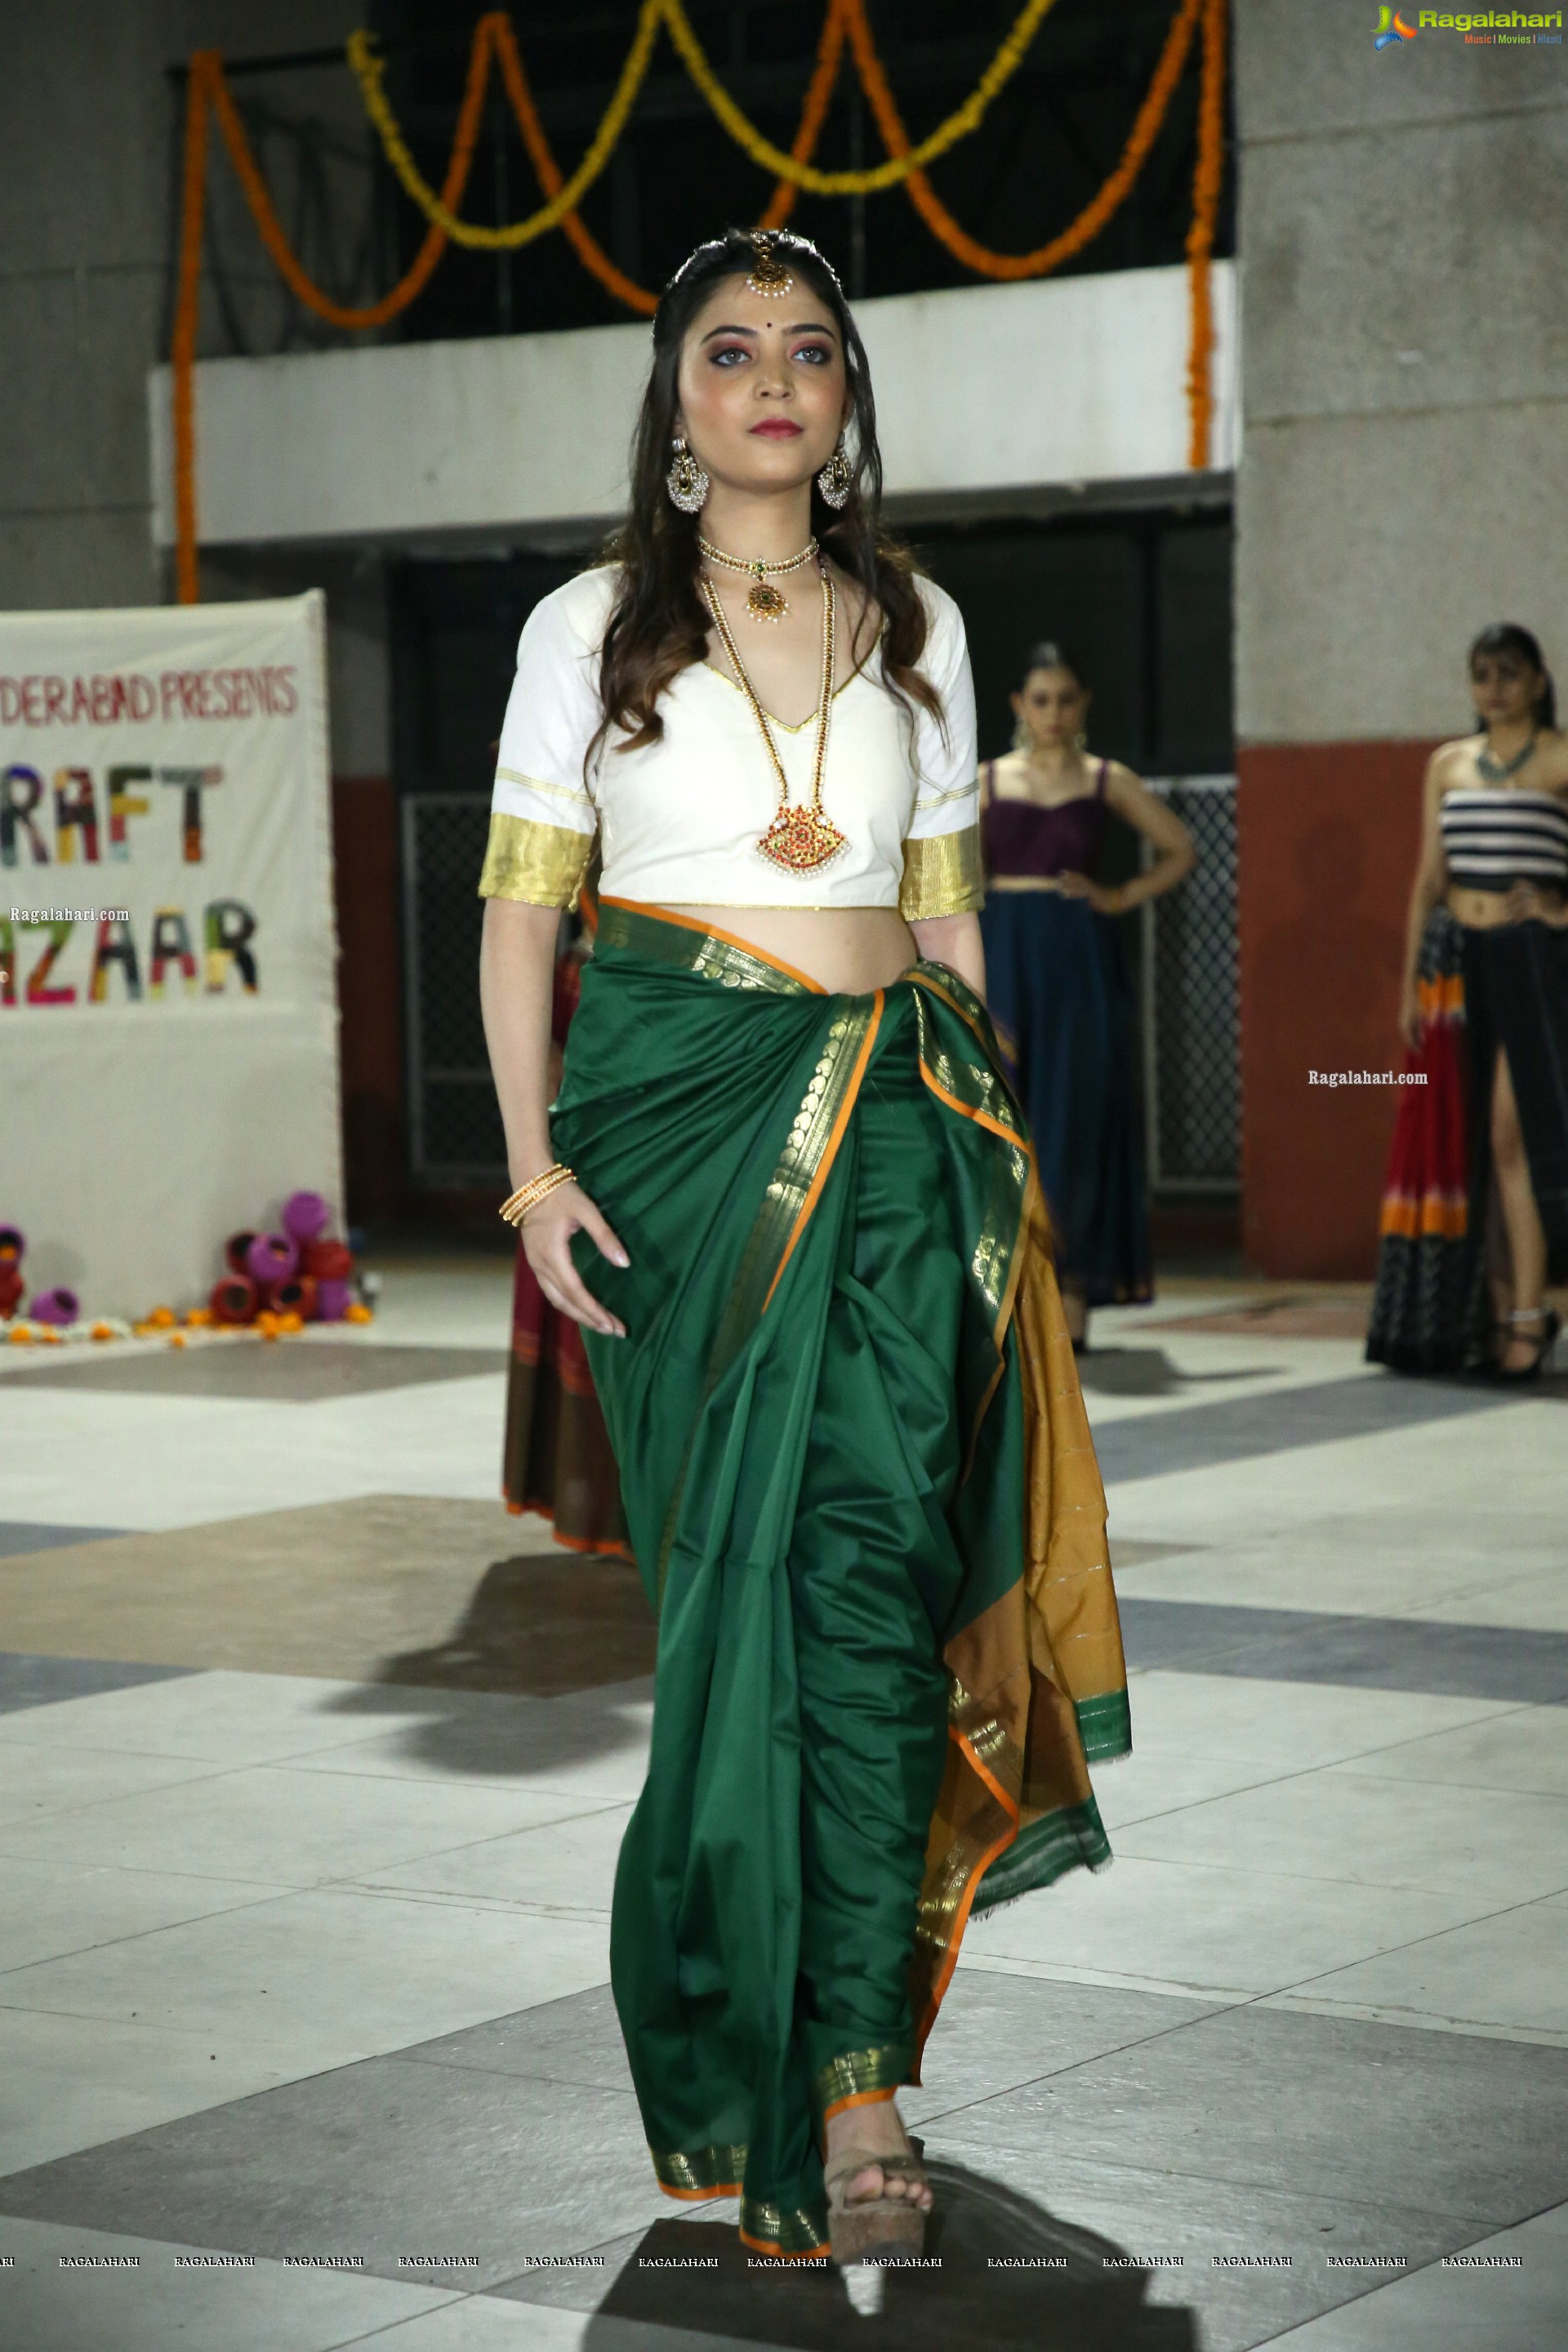 Craft Bazar 'Vividhkala' - A Fashion Exavaganza at NIFT Centre Square